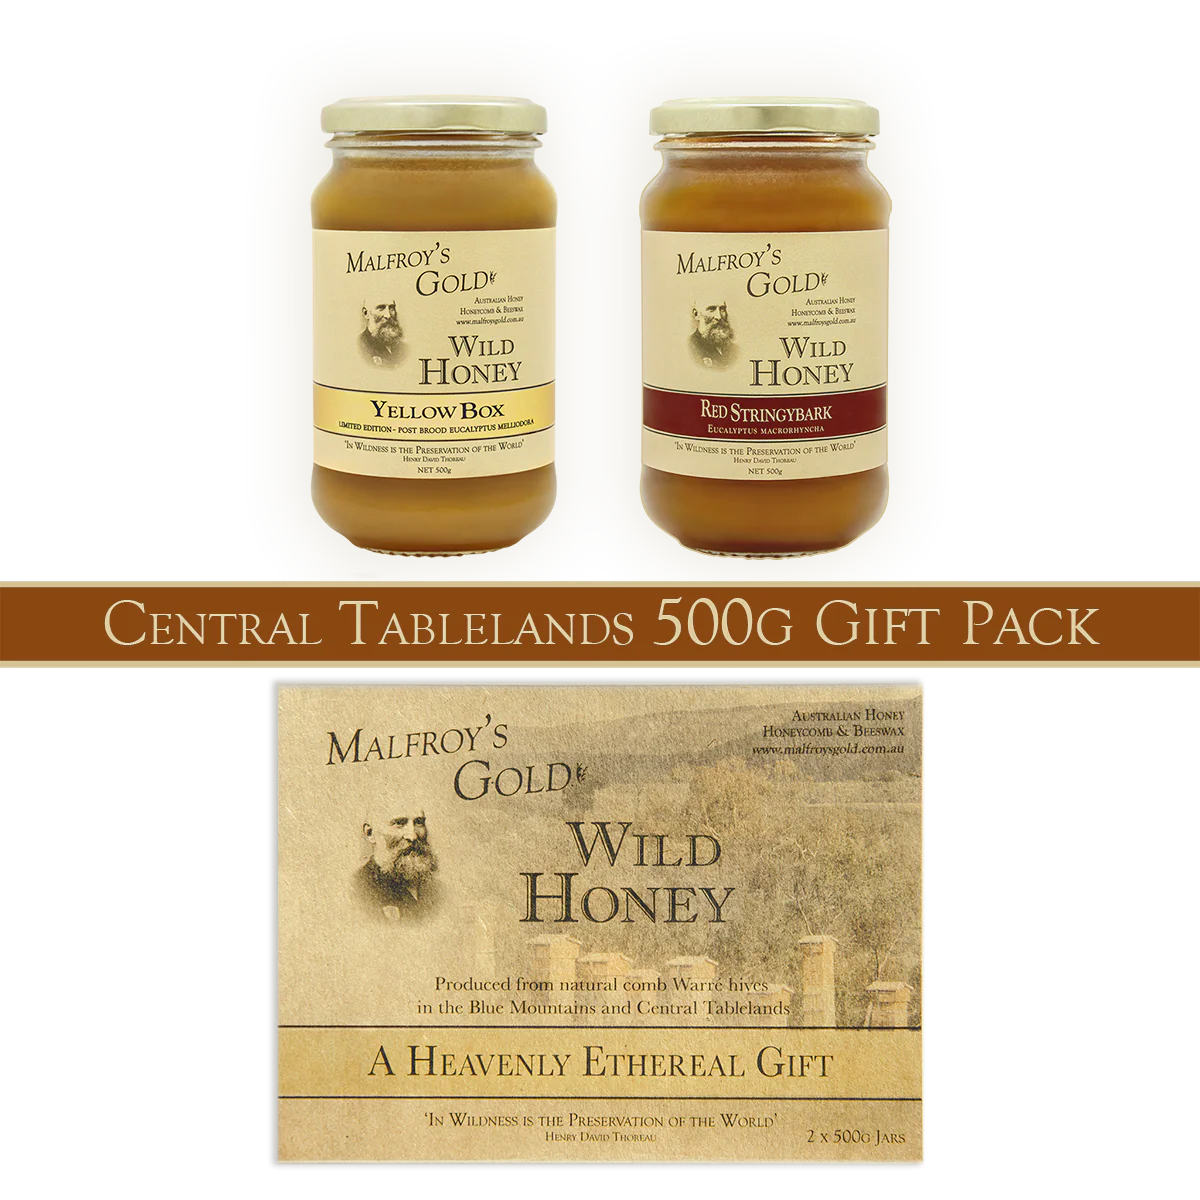 Malfroy's Gold Wild Honey 500g Mixed Wild Honey Gift Pack